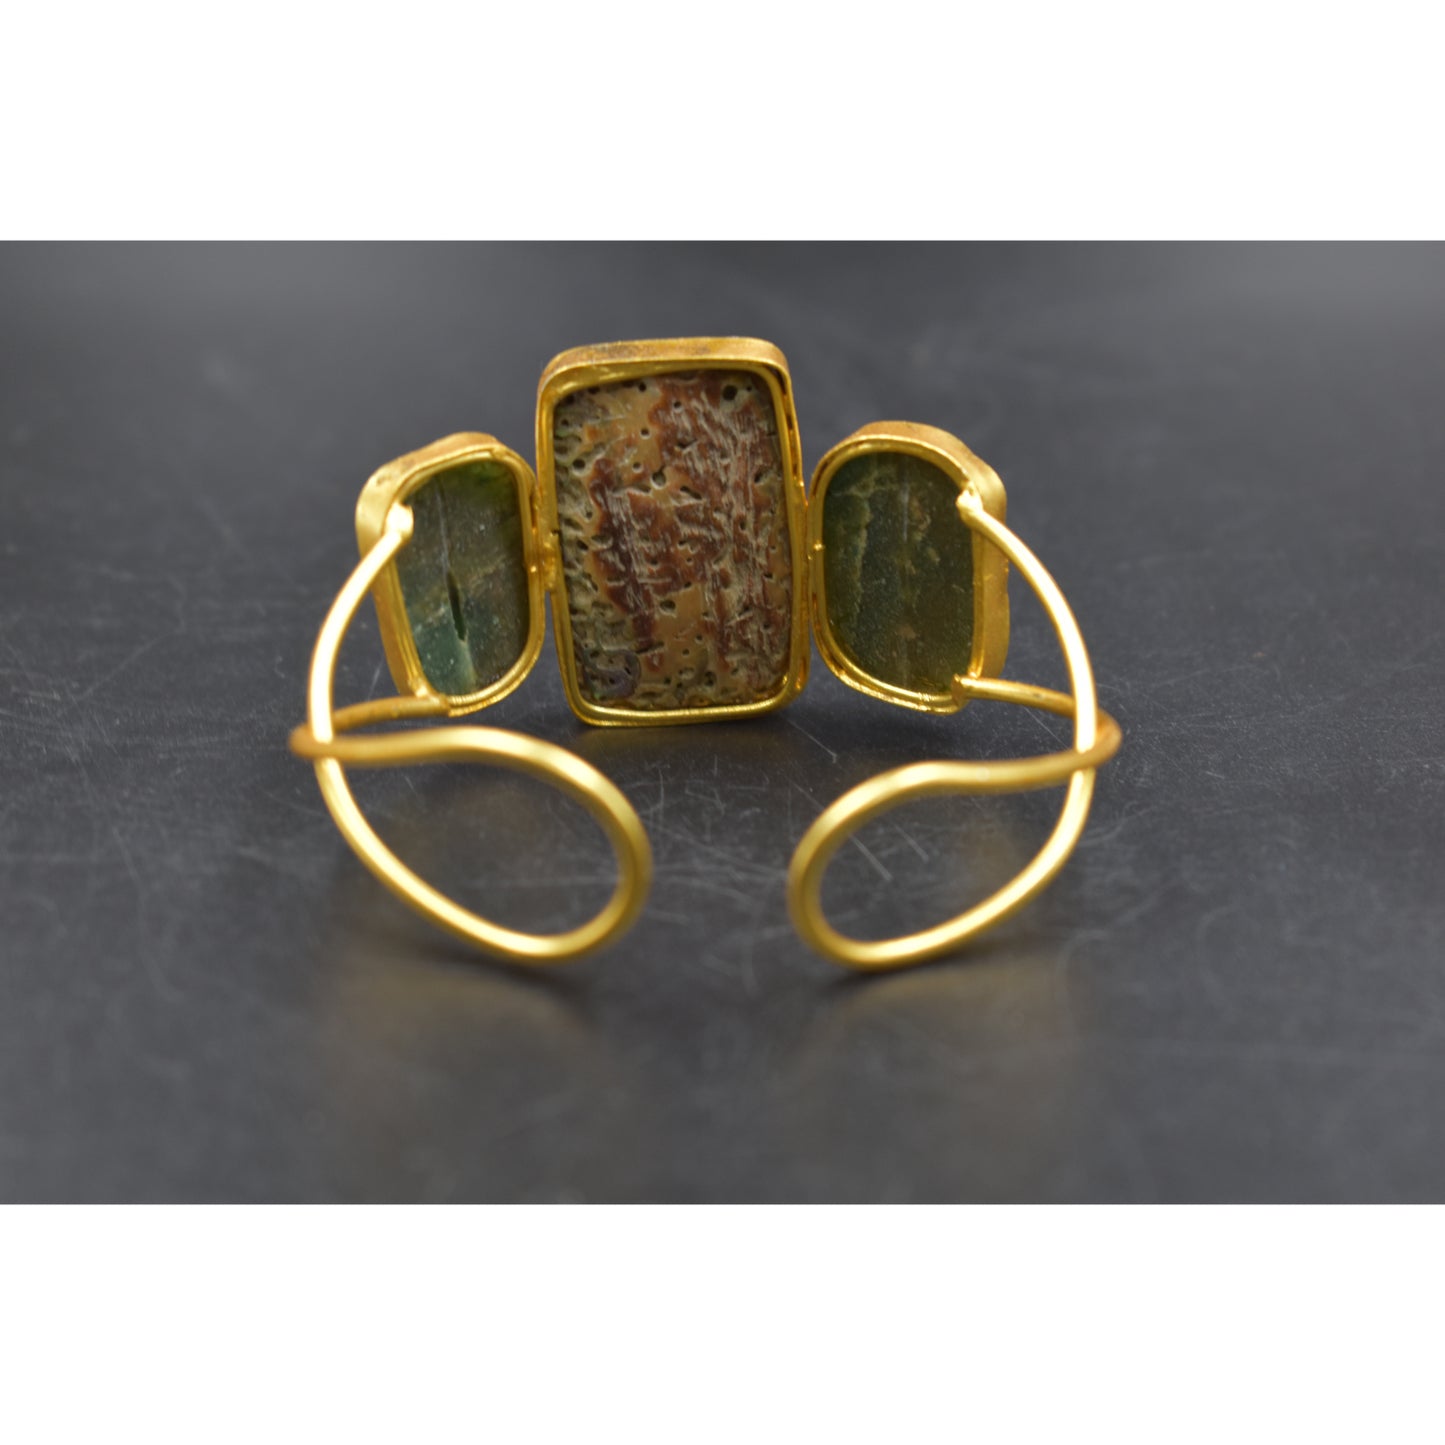 A piece of goldplated semiprecious stone bangle